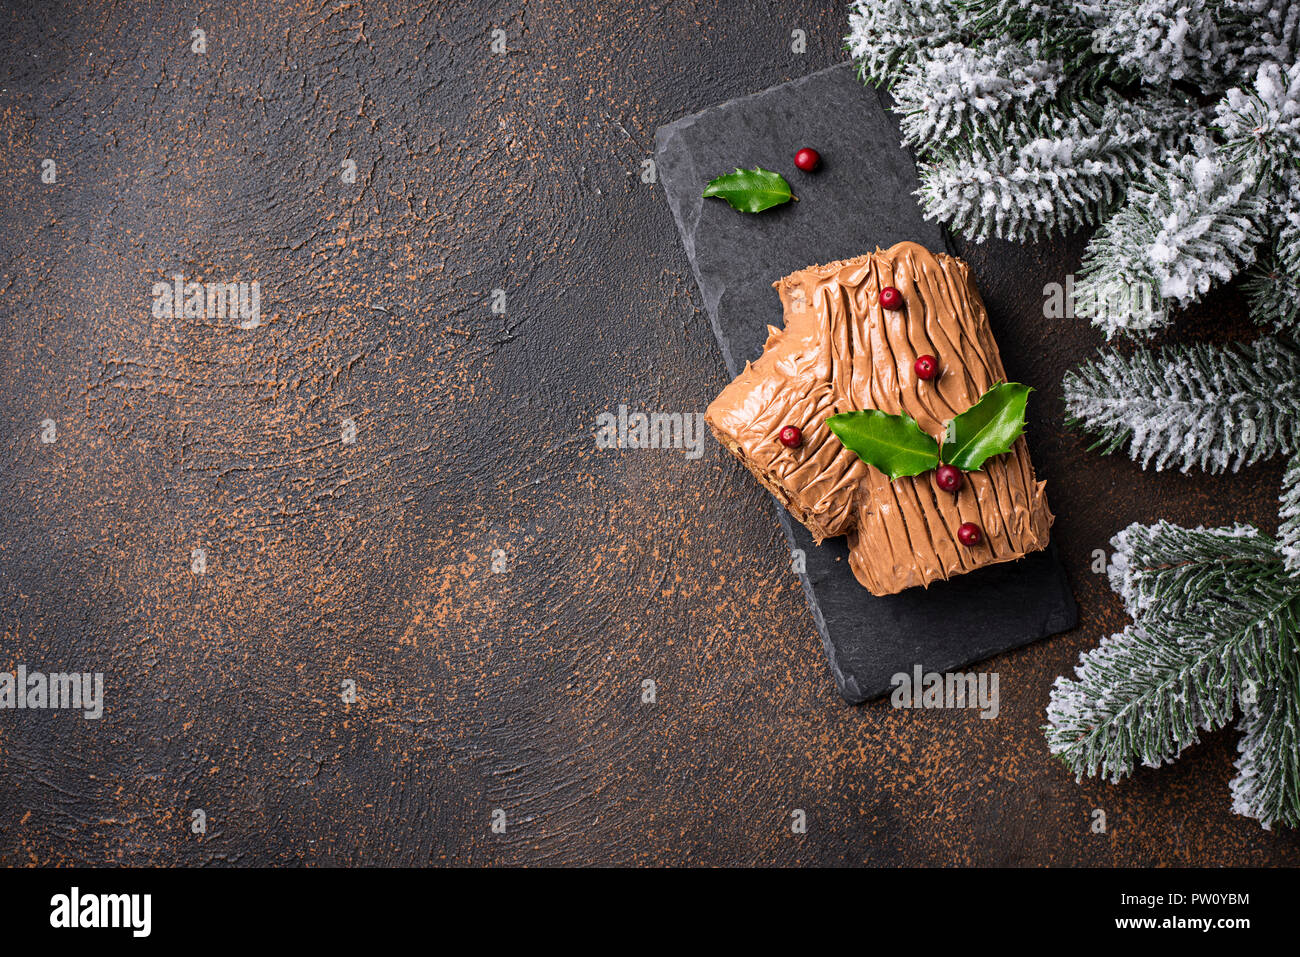 Christmas yule log cake. Traditional chocolate dessert on festive background Stock Photo